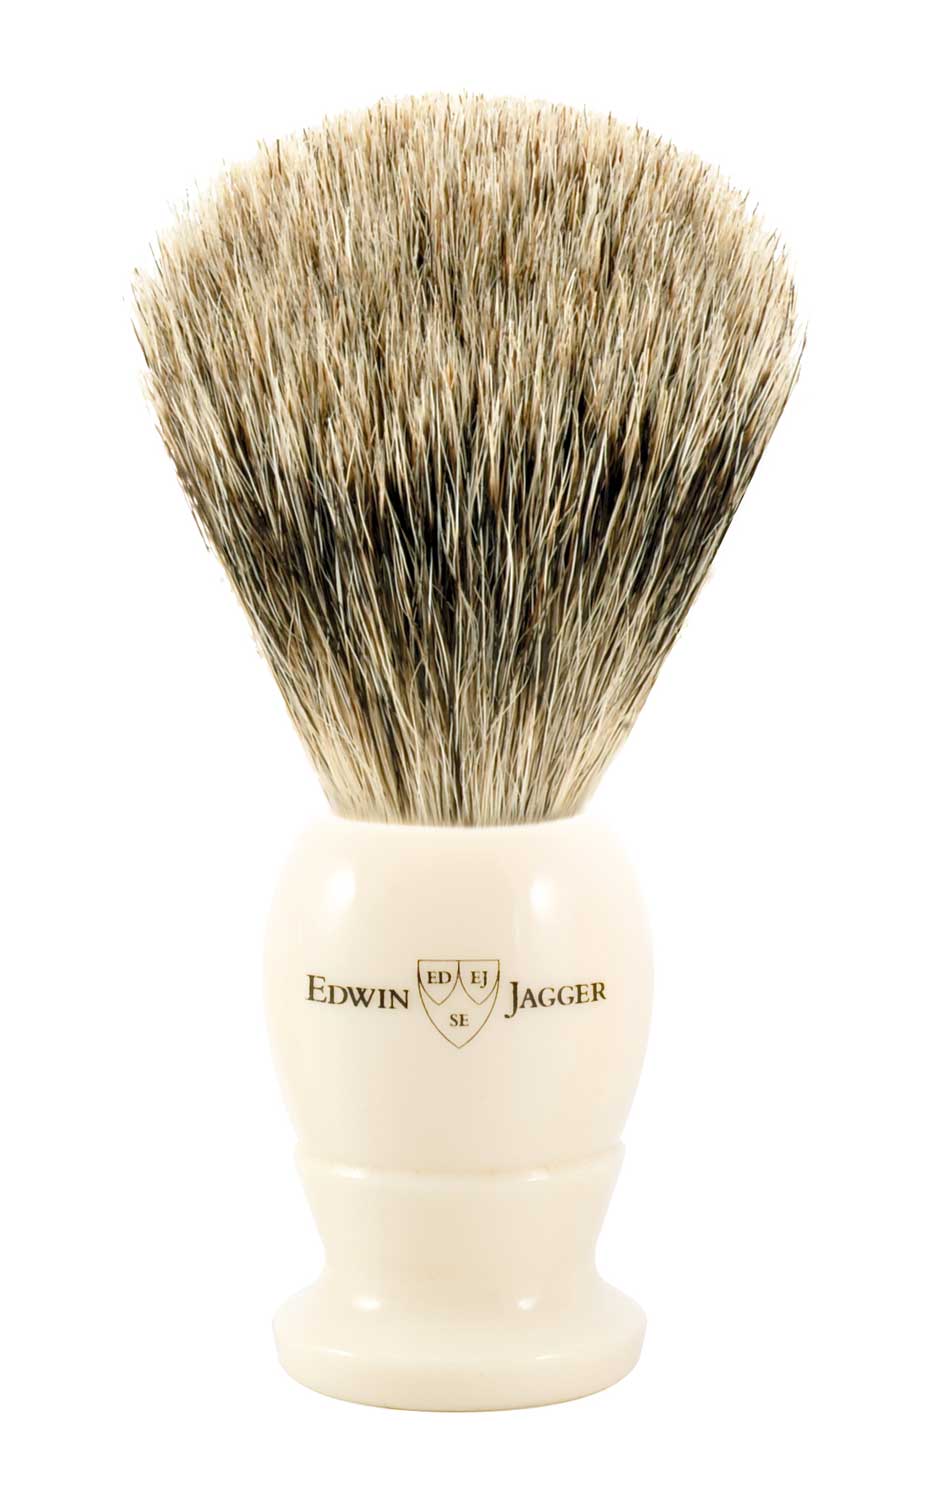 Edwin Jagger Extra Large Imitation Ivory Best Badger Brush W/Stand